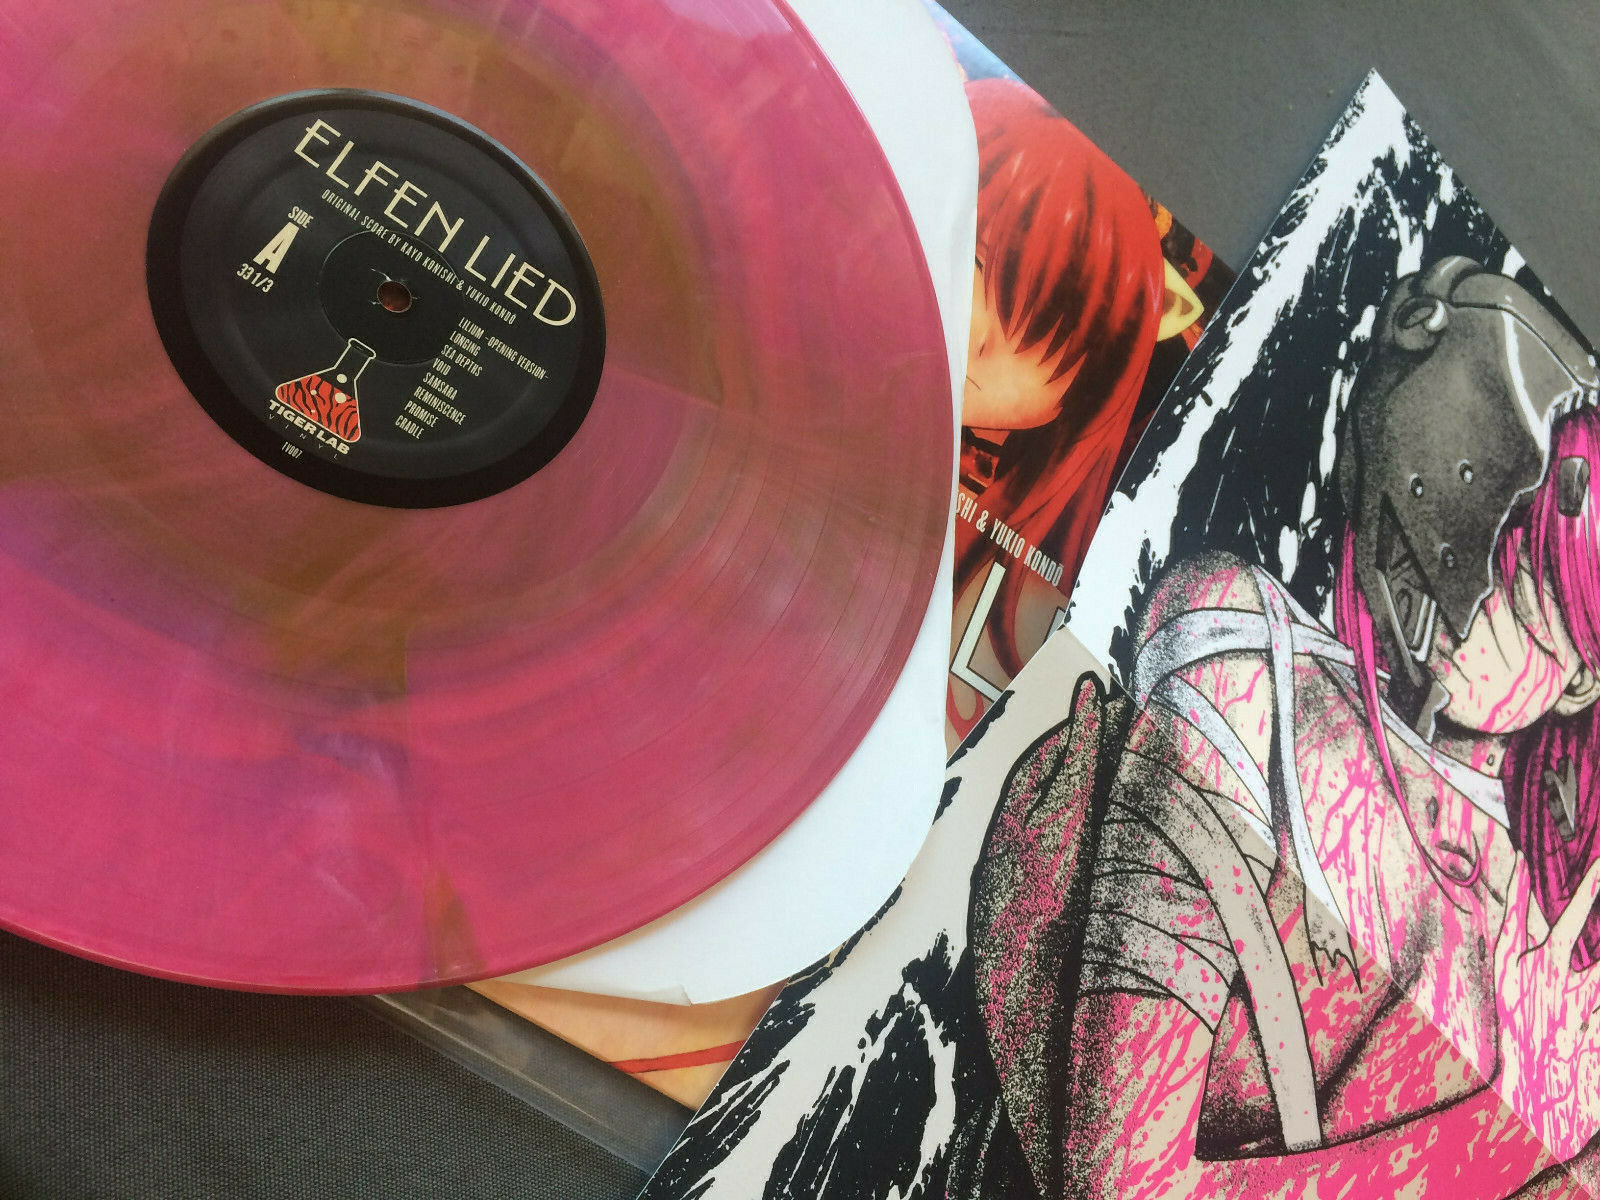 Tiger Lab Vinyl Announces Elfen Lied Vinyl Repress